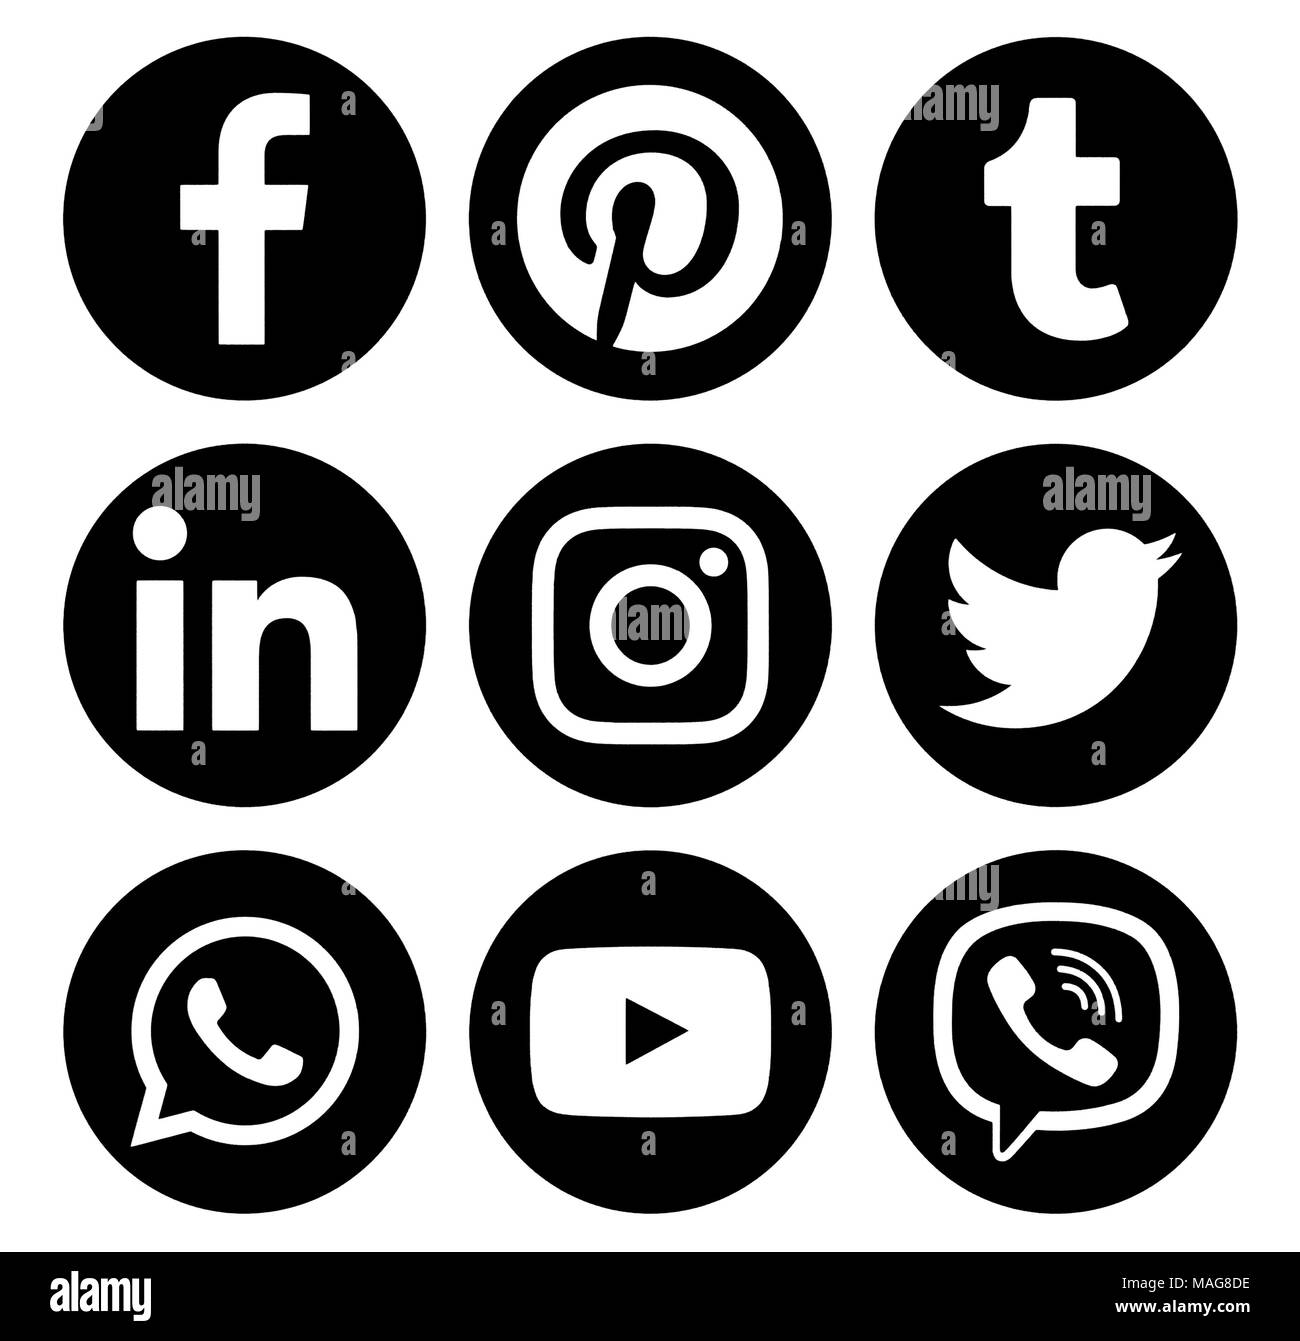 Kiev, Ukraine - January 16, 2018: Popular circle social media black logos printed on paper: Facebook, Twitter, Instagram, Pinterest, LinkedIn, Viber,  Stock Photo